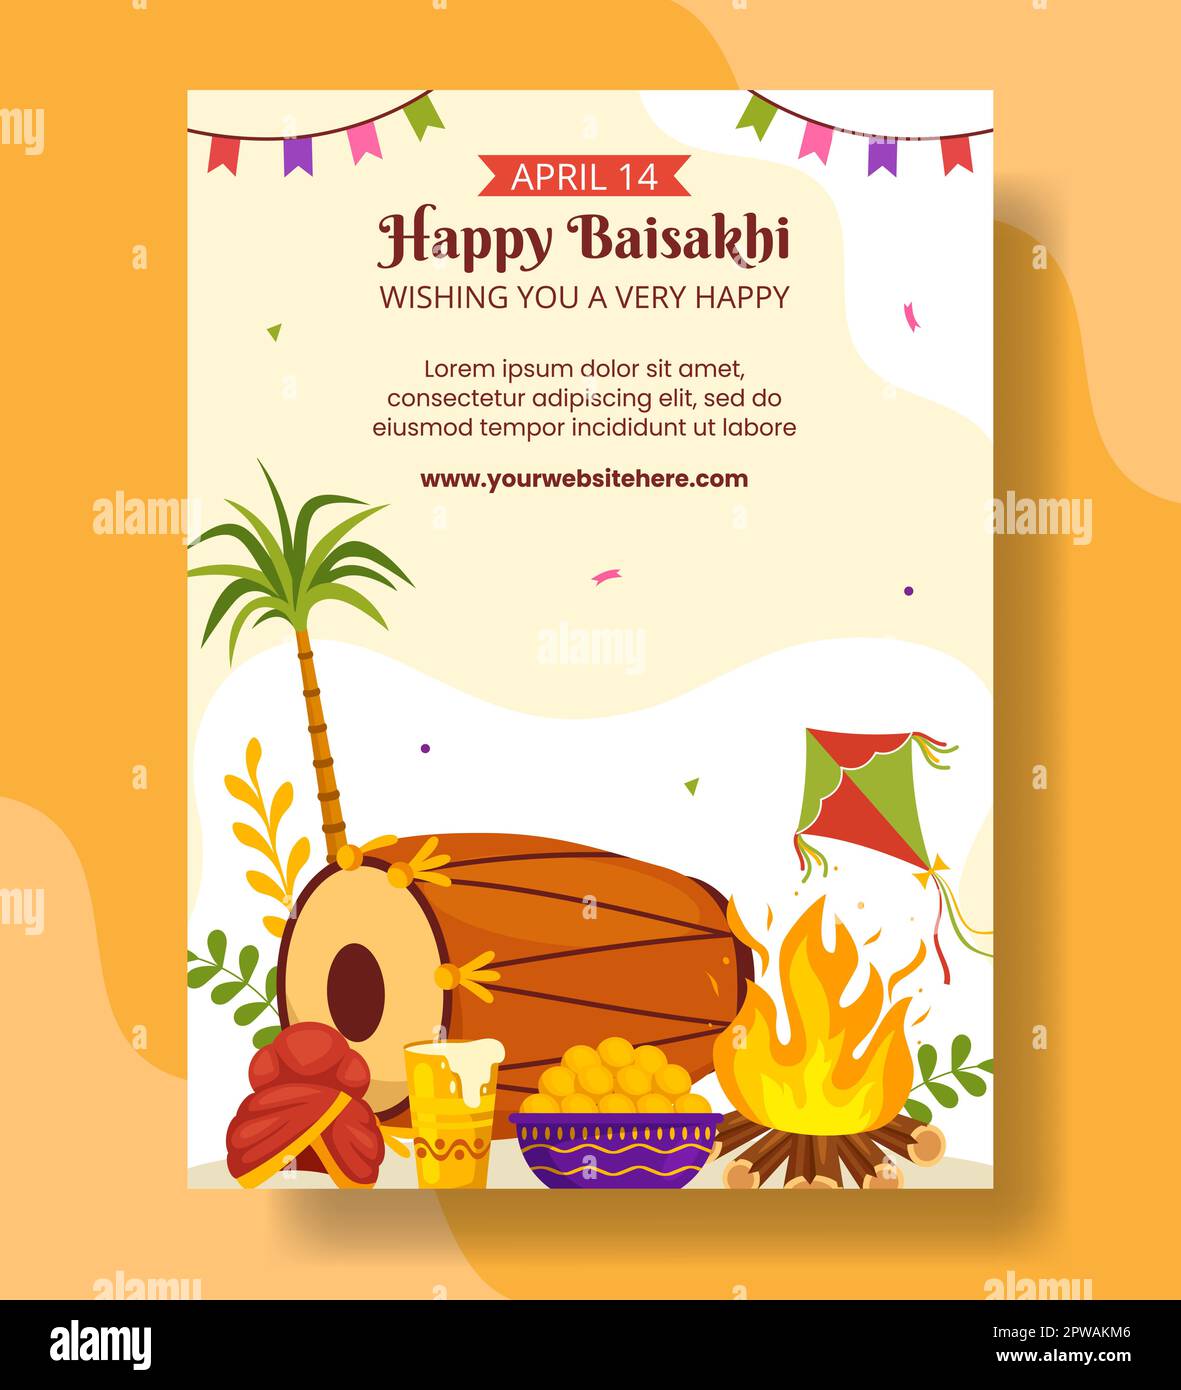 Happy Baisakhi Vertical Poster Cartoon Hand Drawn Templates Background Illustration Stock Vector